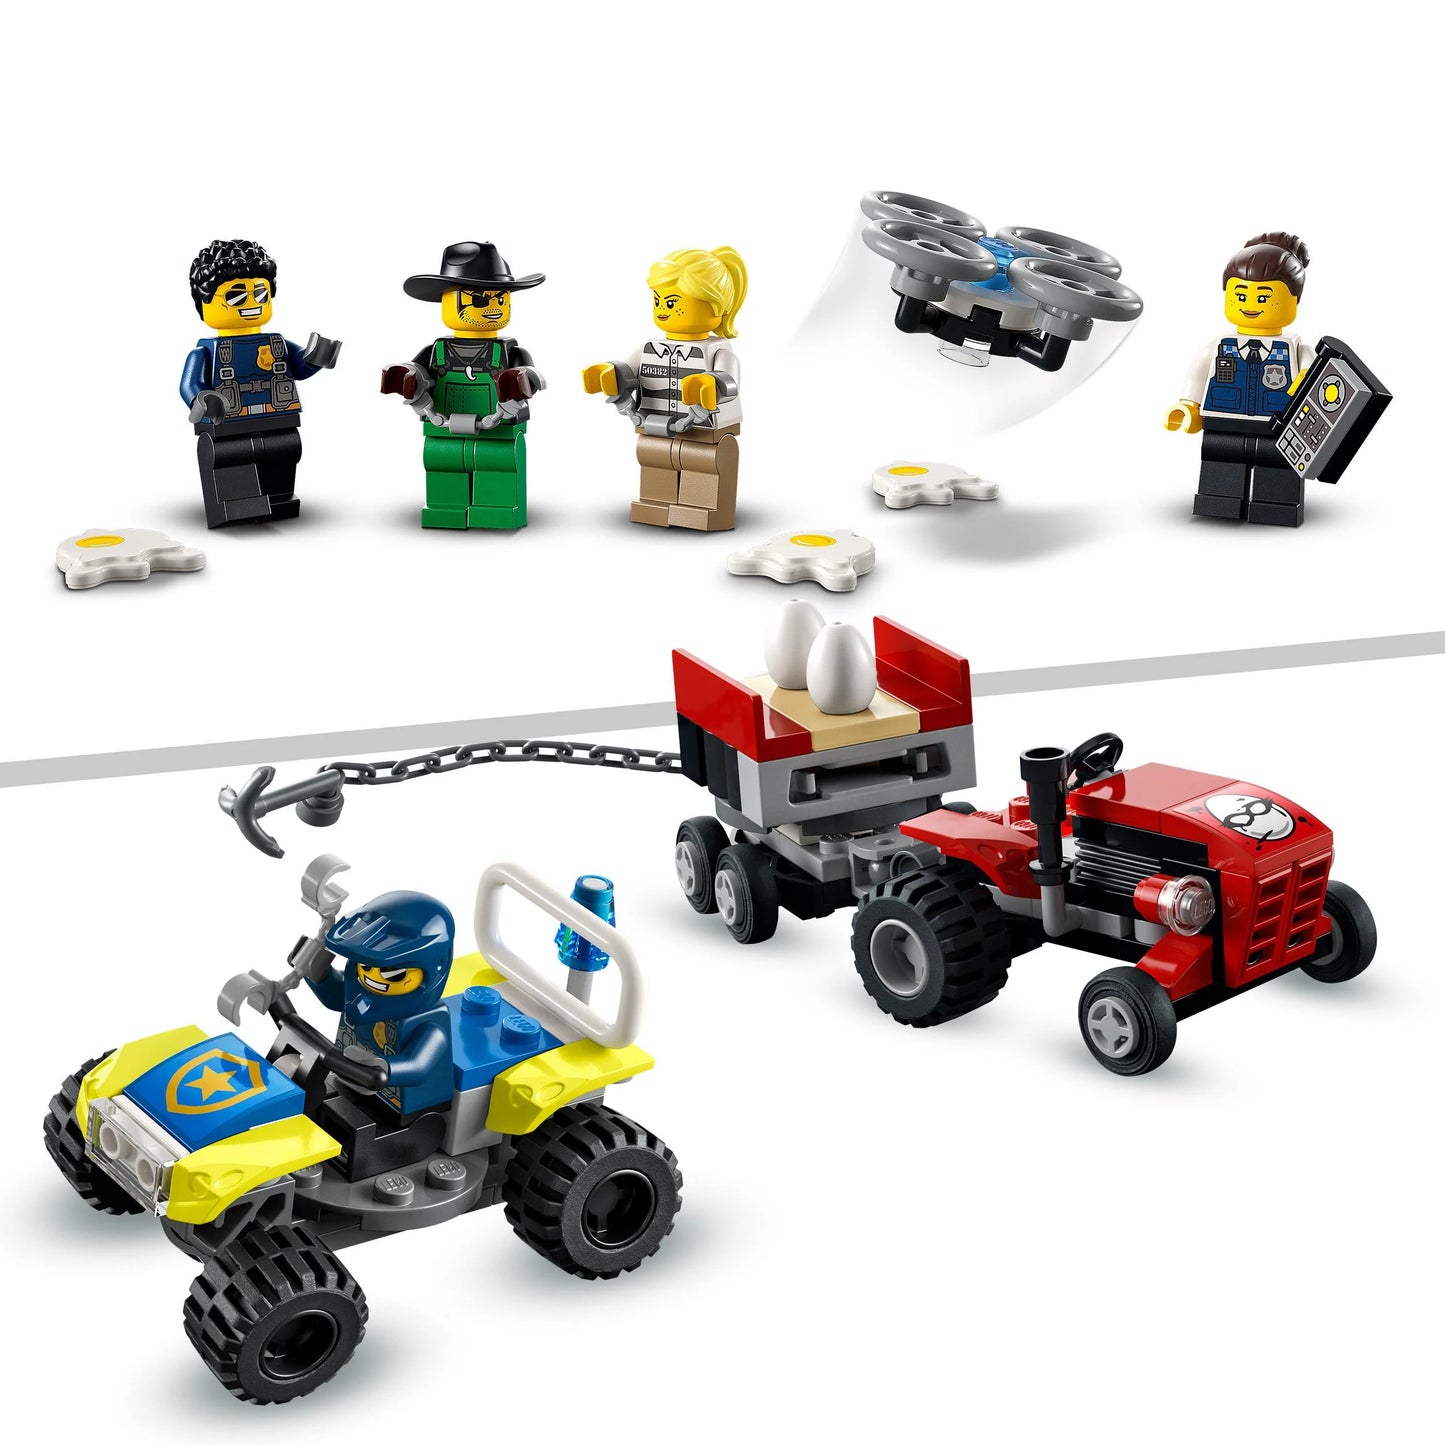 Mobiele commandowagen politie-LEGO City